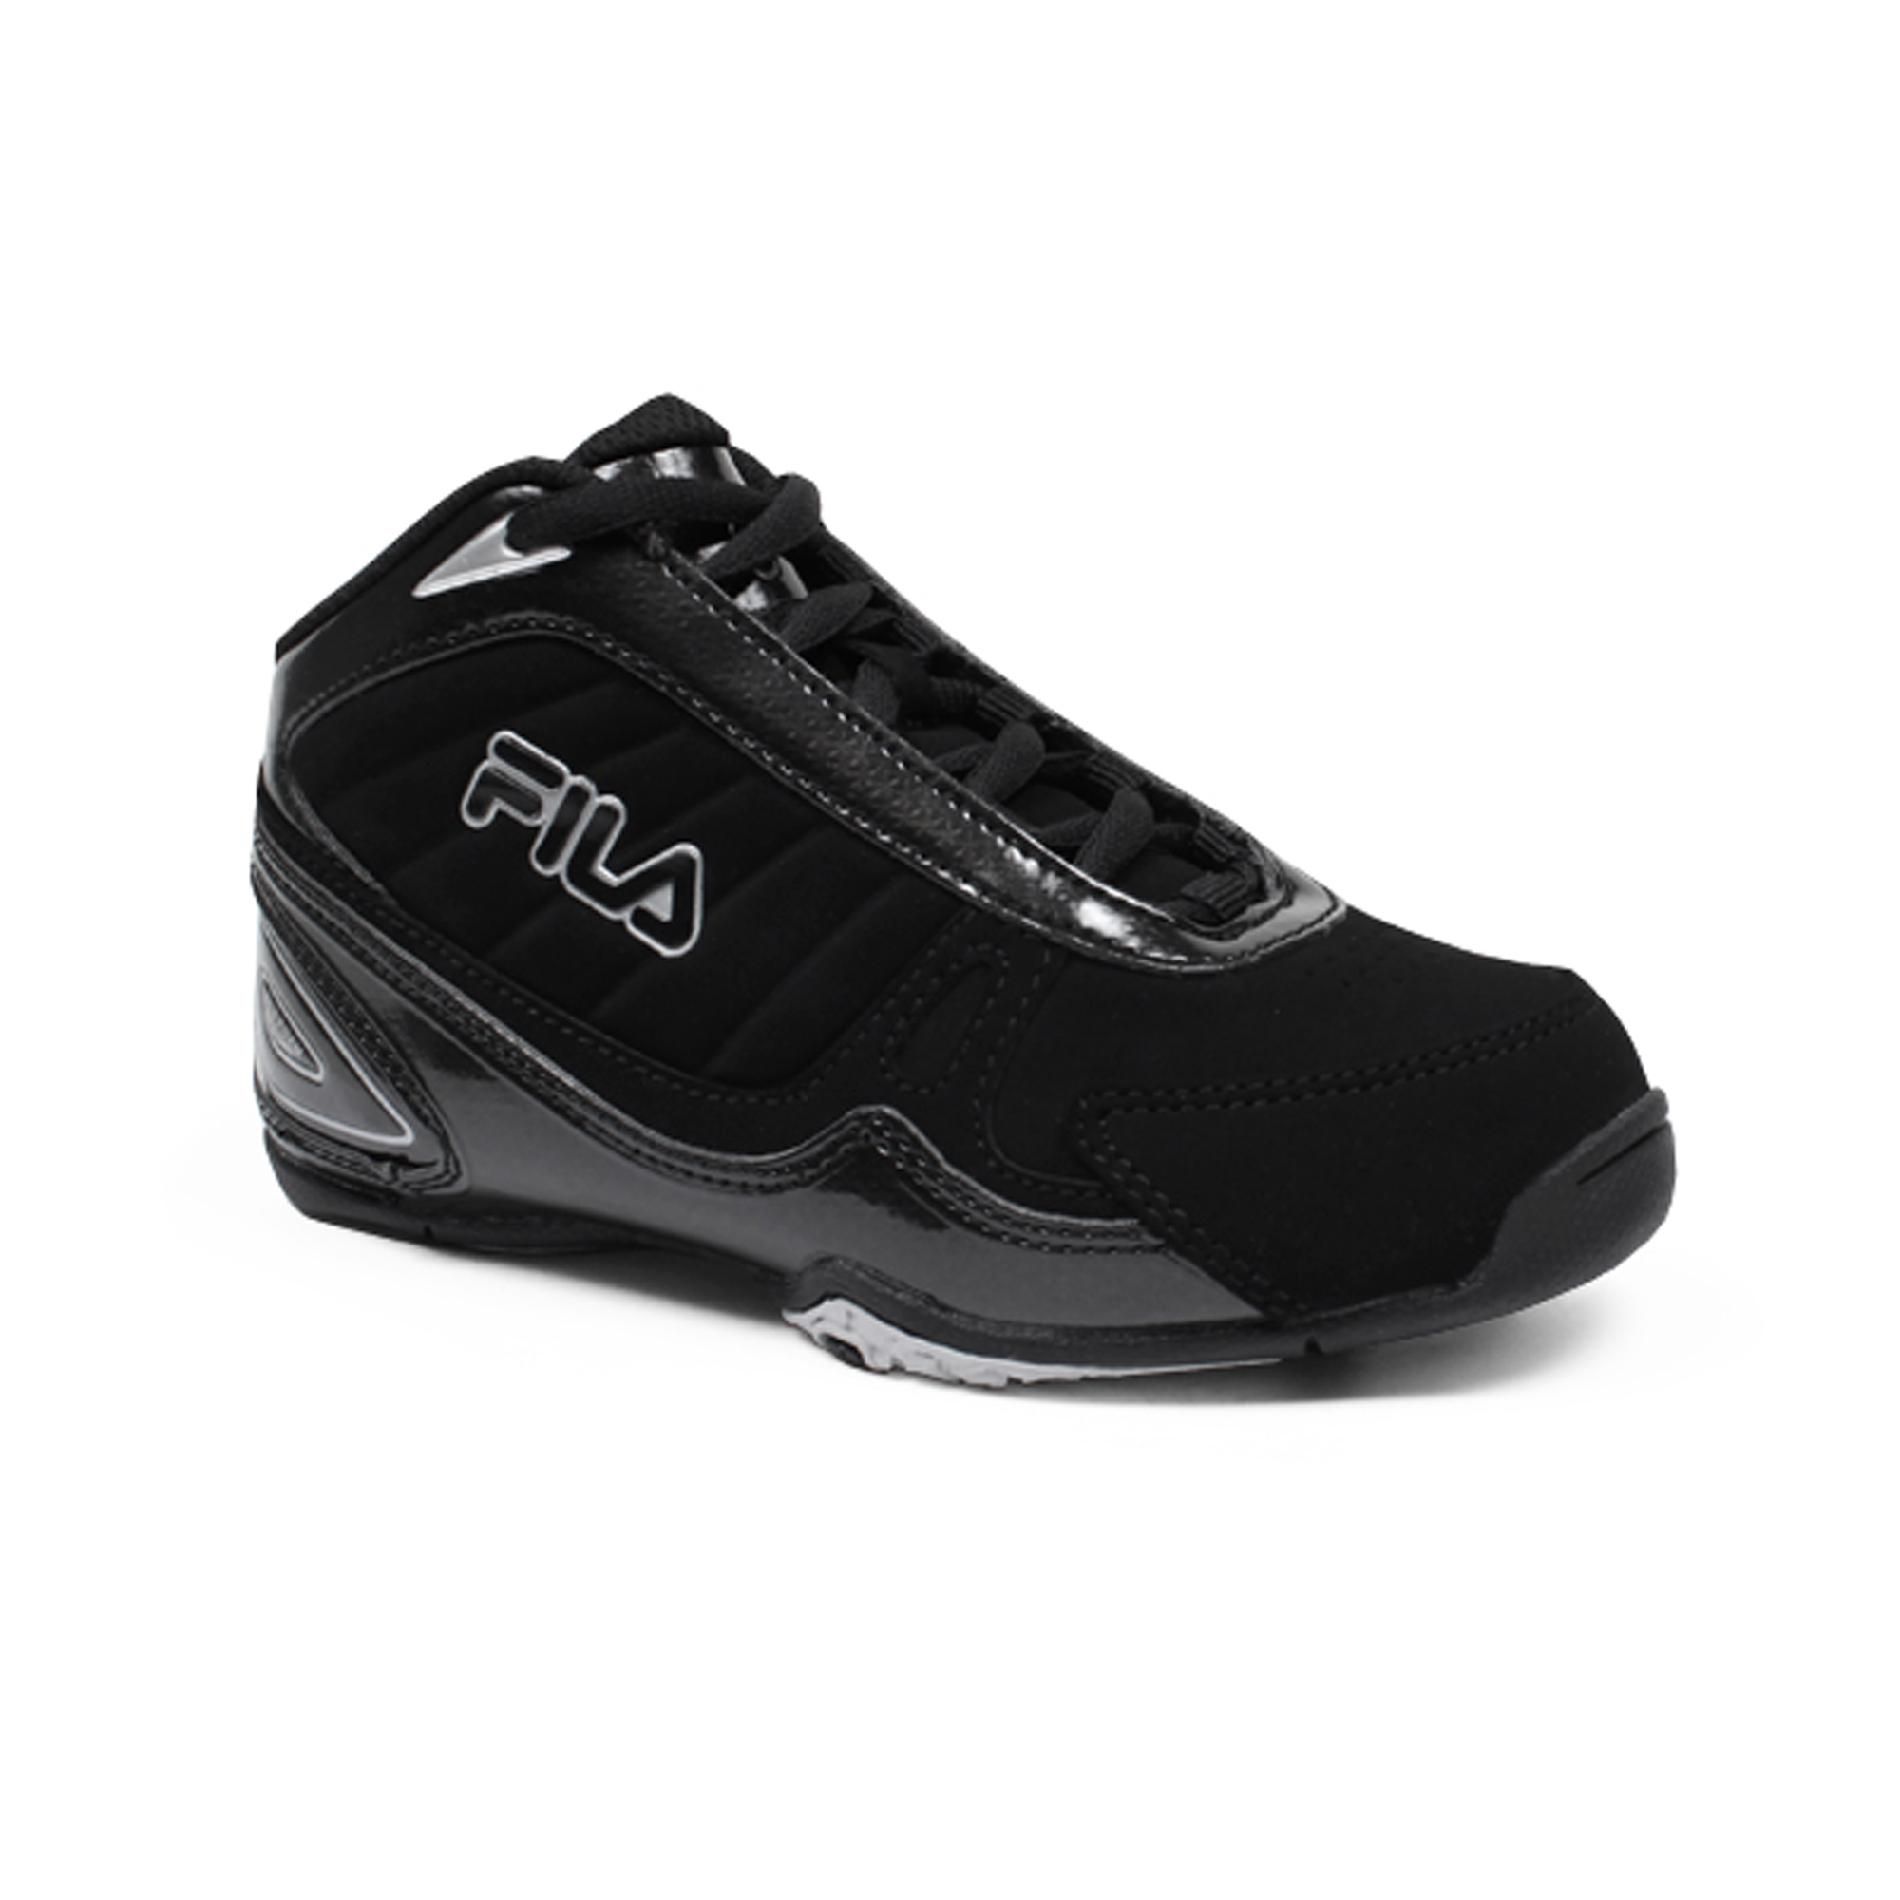 Fila Boy's Athletic Shoe DLS Game Ball - Black/Black/Silver